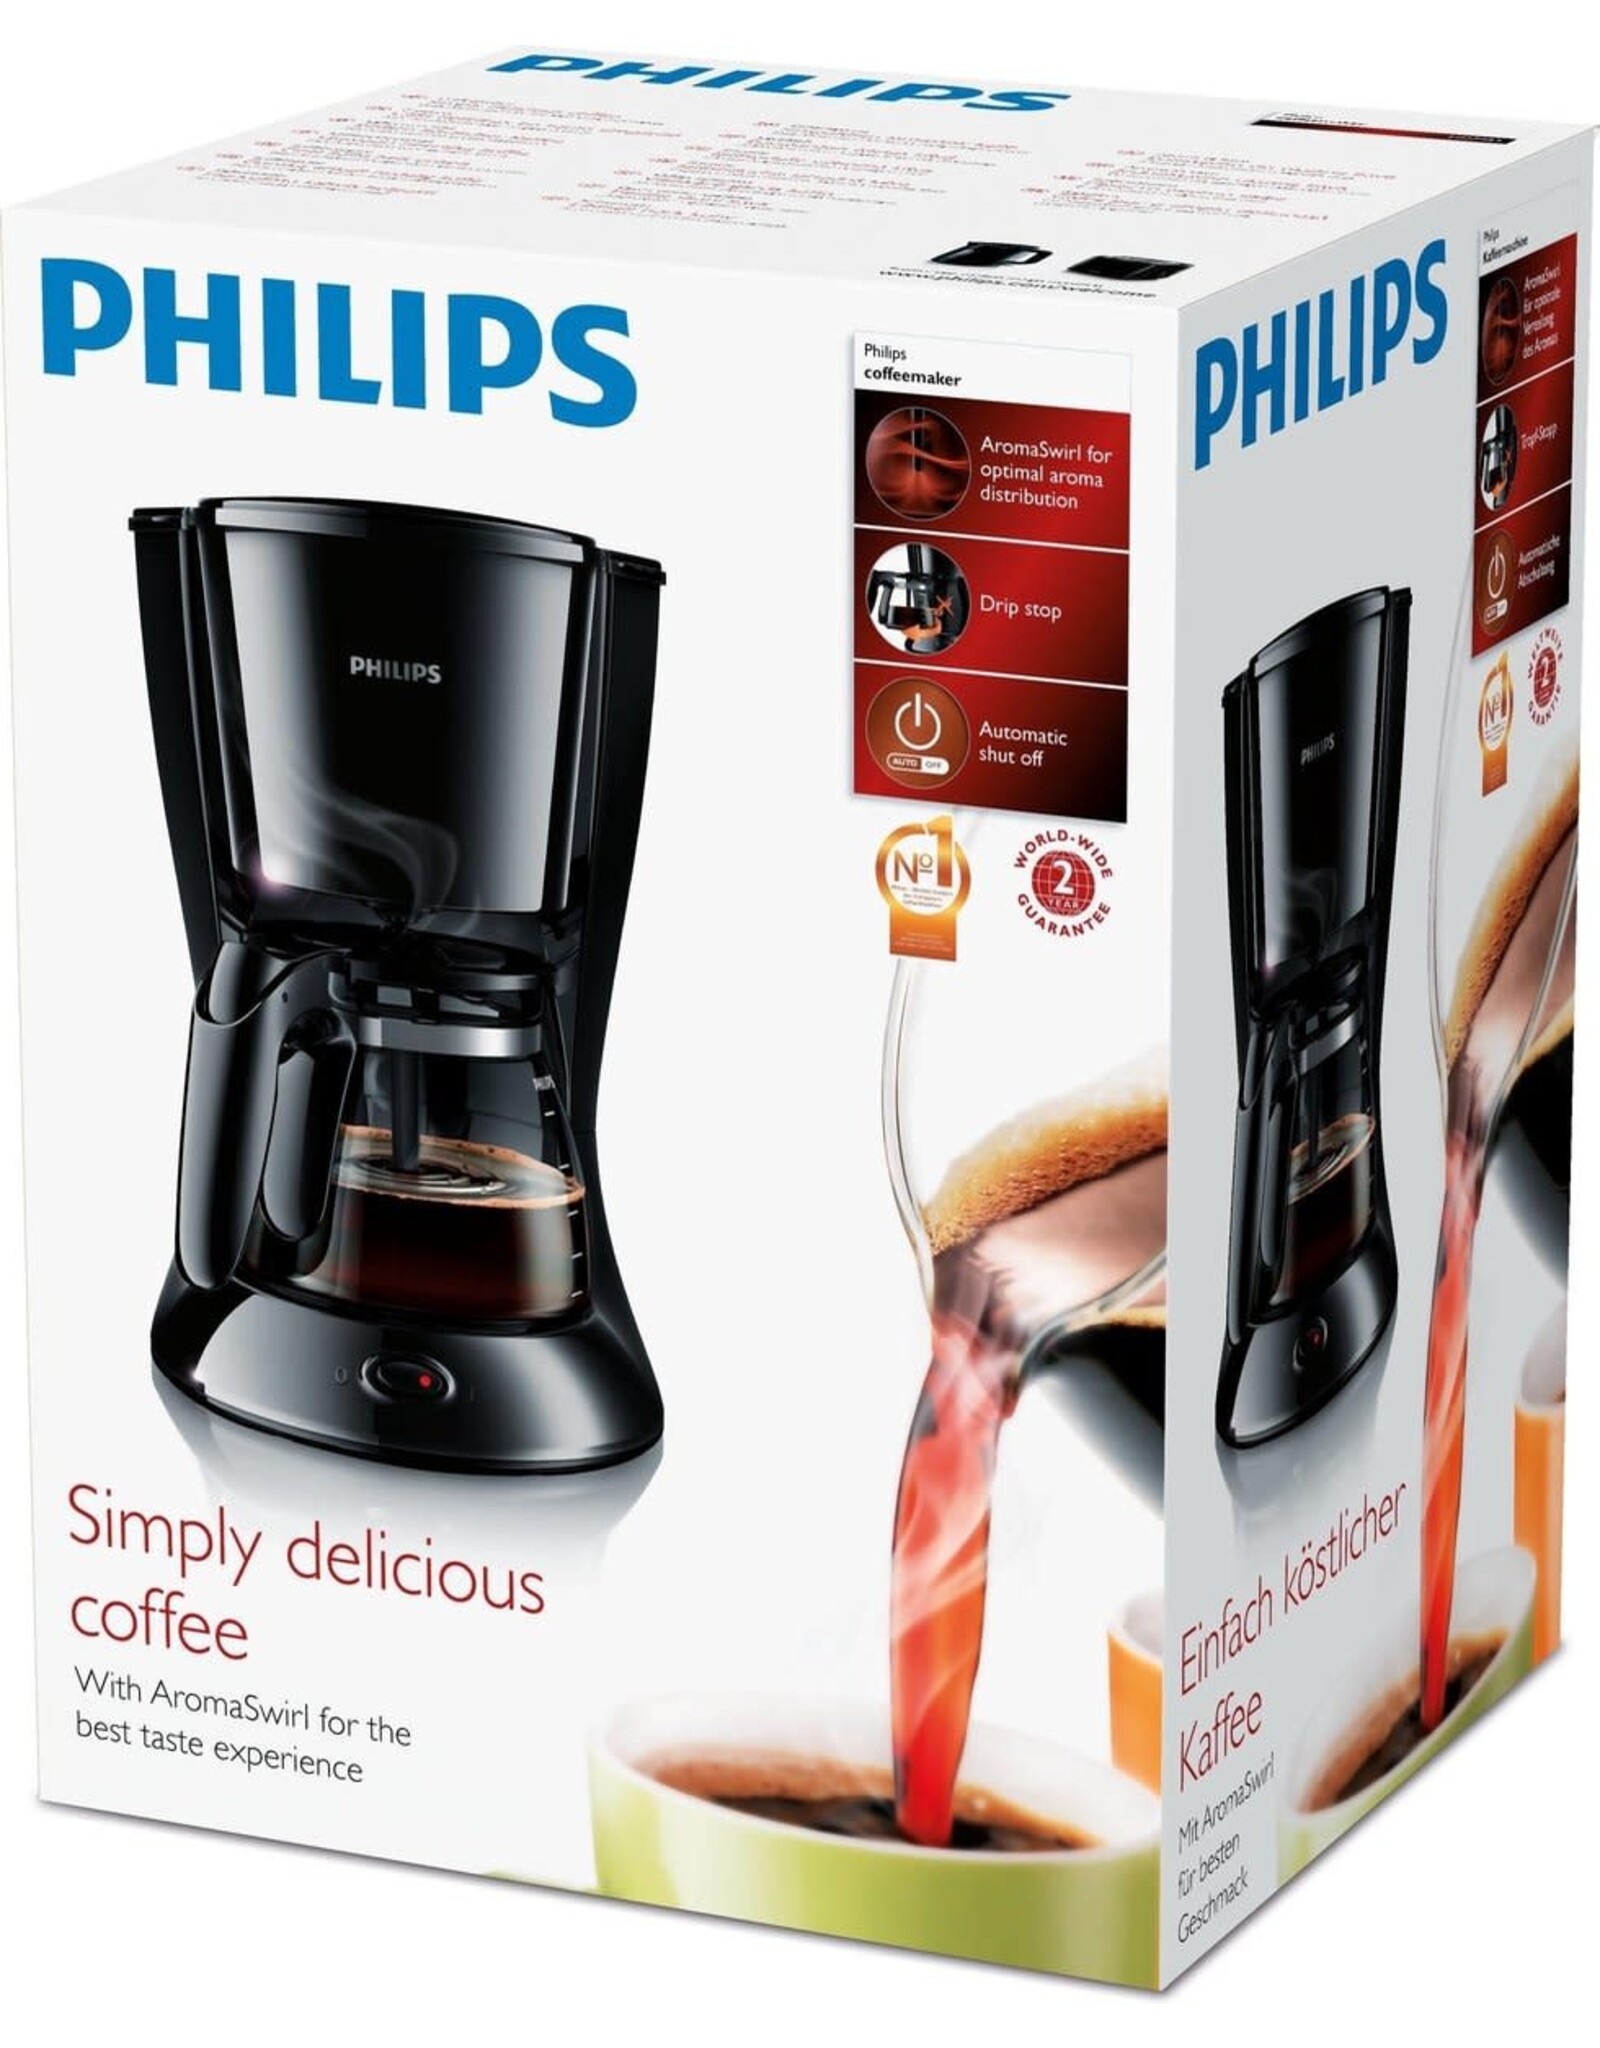 PHILIPS Philips Daily HD7432/20 - Compact koffiezetapparaat - Zwart